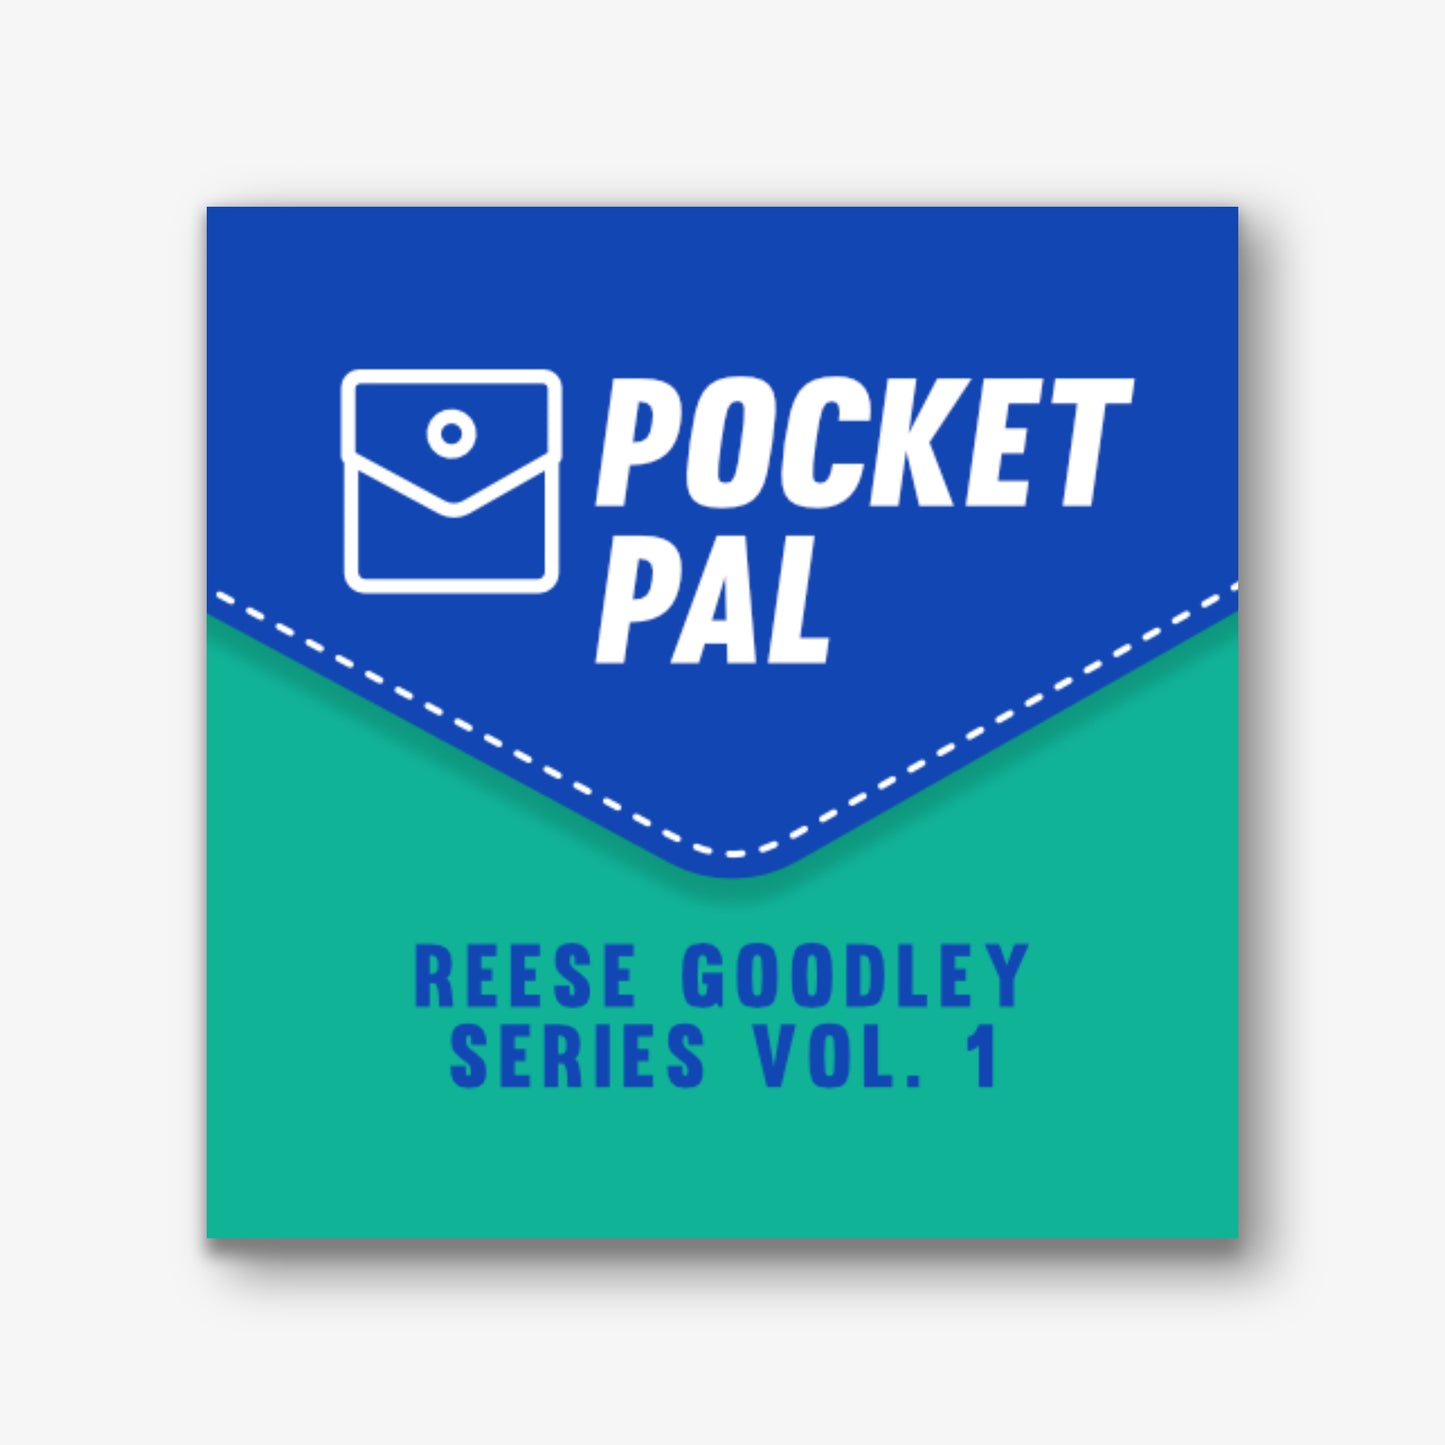 Pocket Pal - Vol 1. Reese Goodley Series